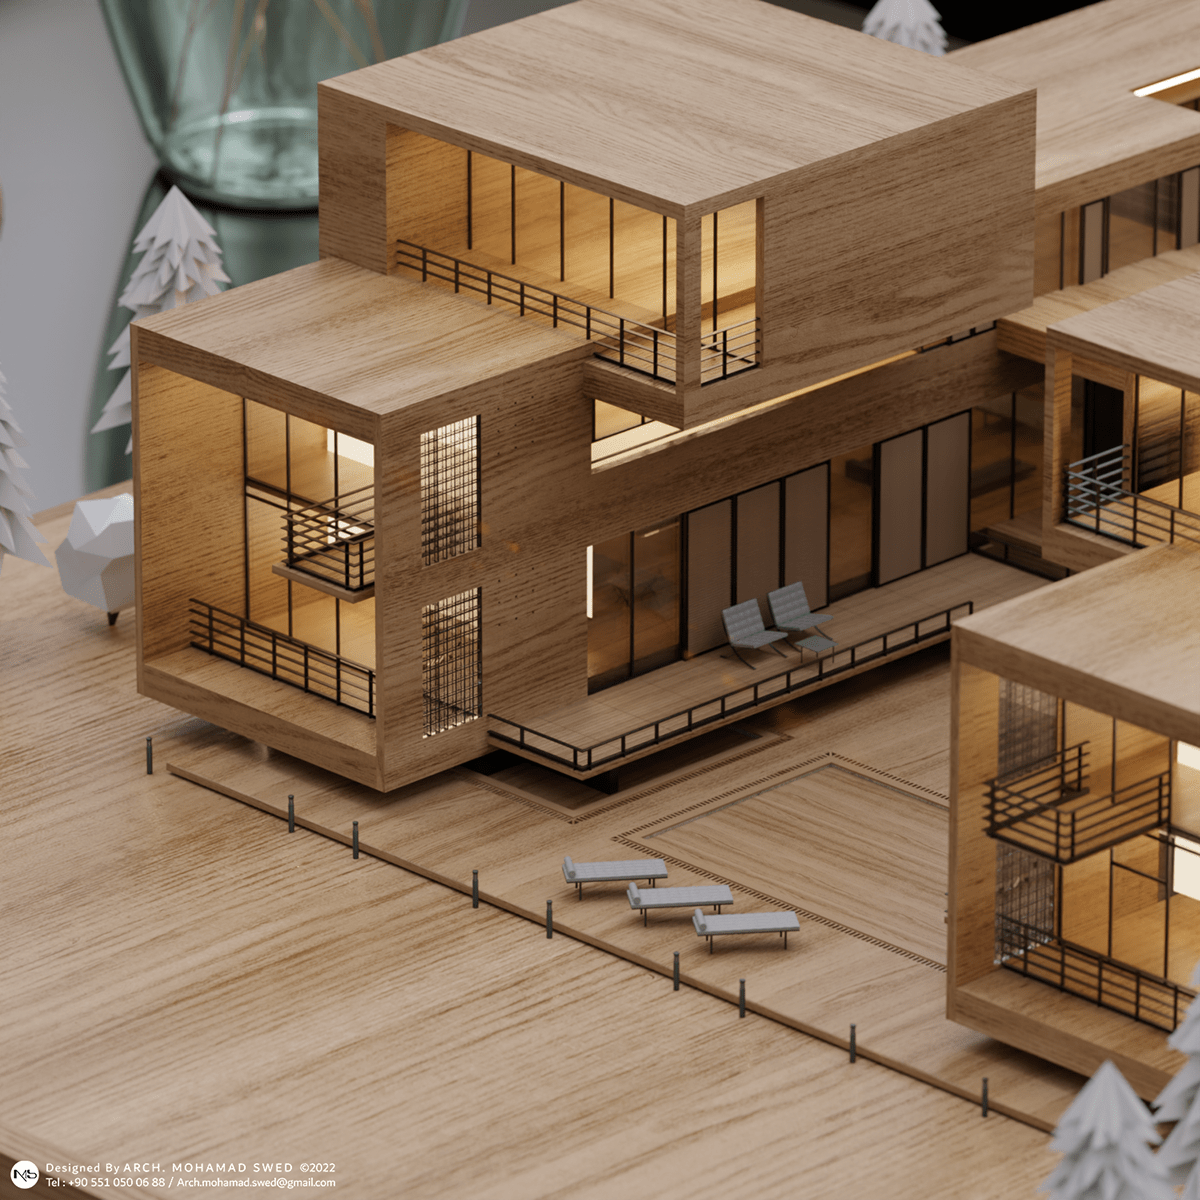 blender blender3d 3D architecture visualization archviz Render modern exterior CGI